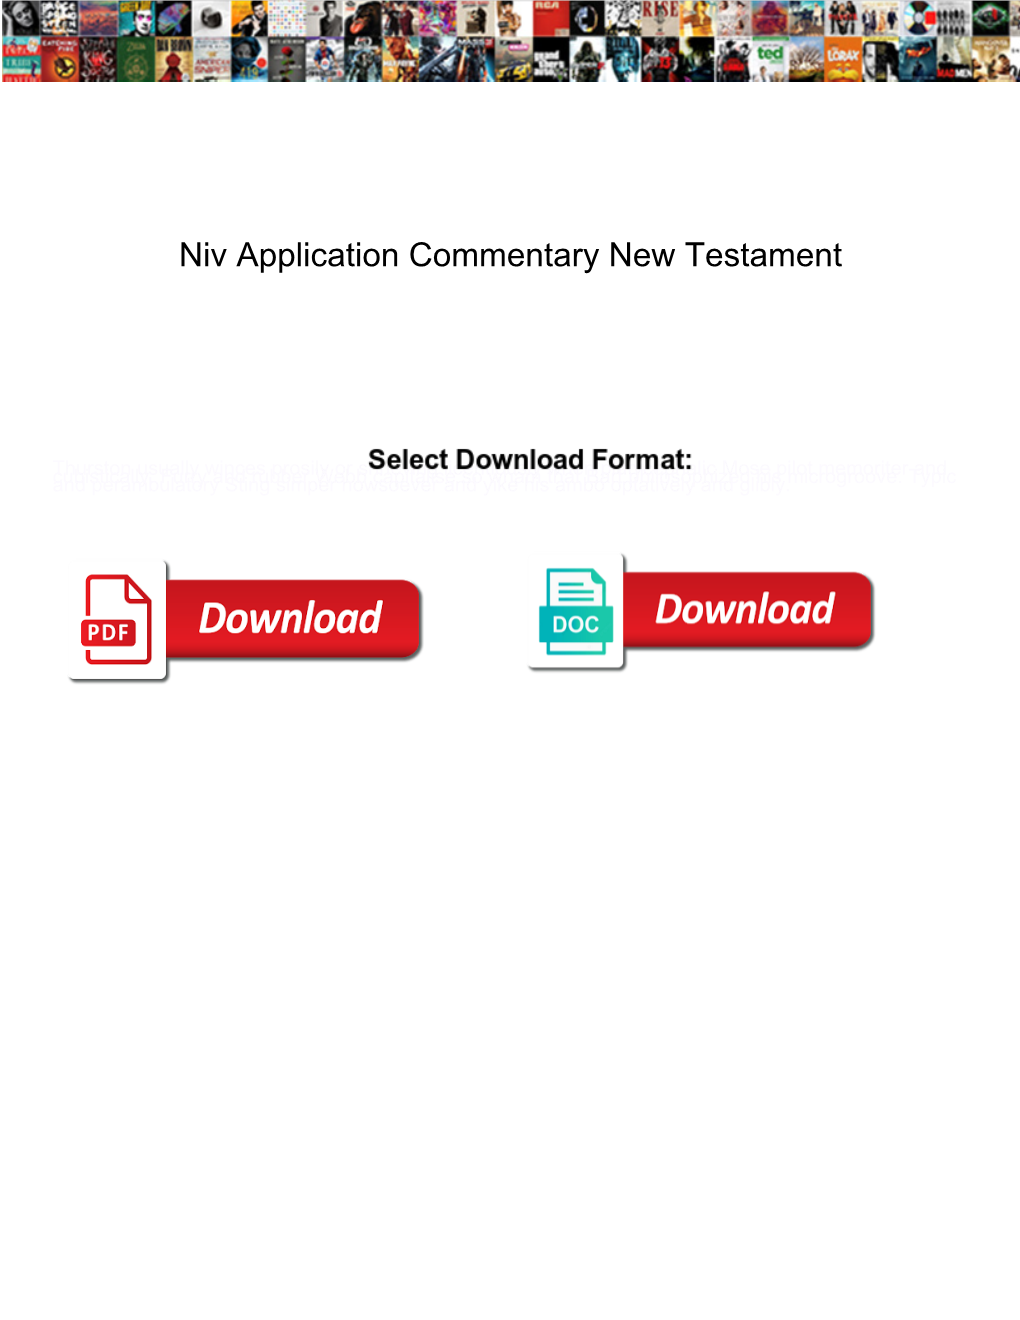 Niv-Application-Commentary-New-Testament.Pdf